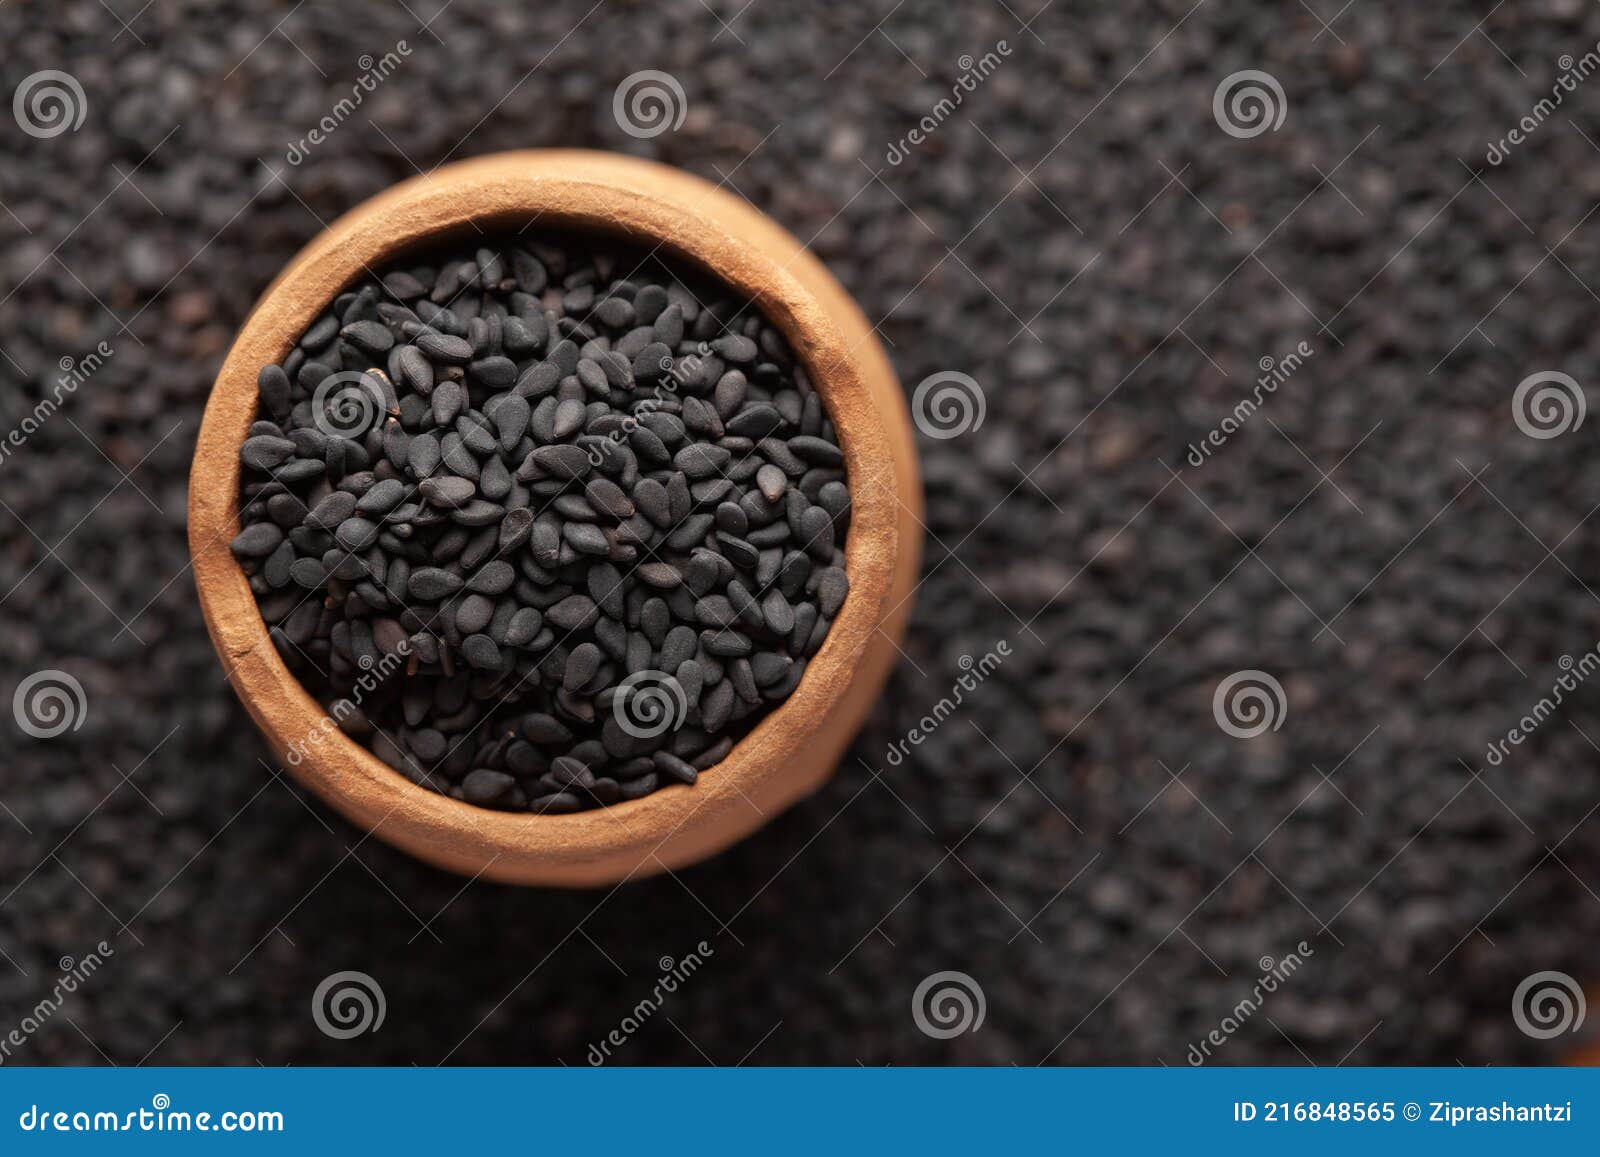 macro close-up of organic black sesame seeds sesamum indicum or black til with shell in an earthen clay pot kulhar